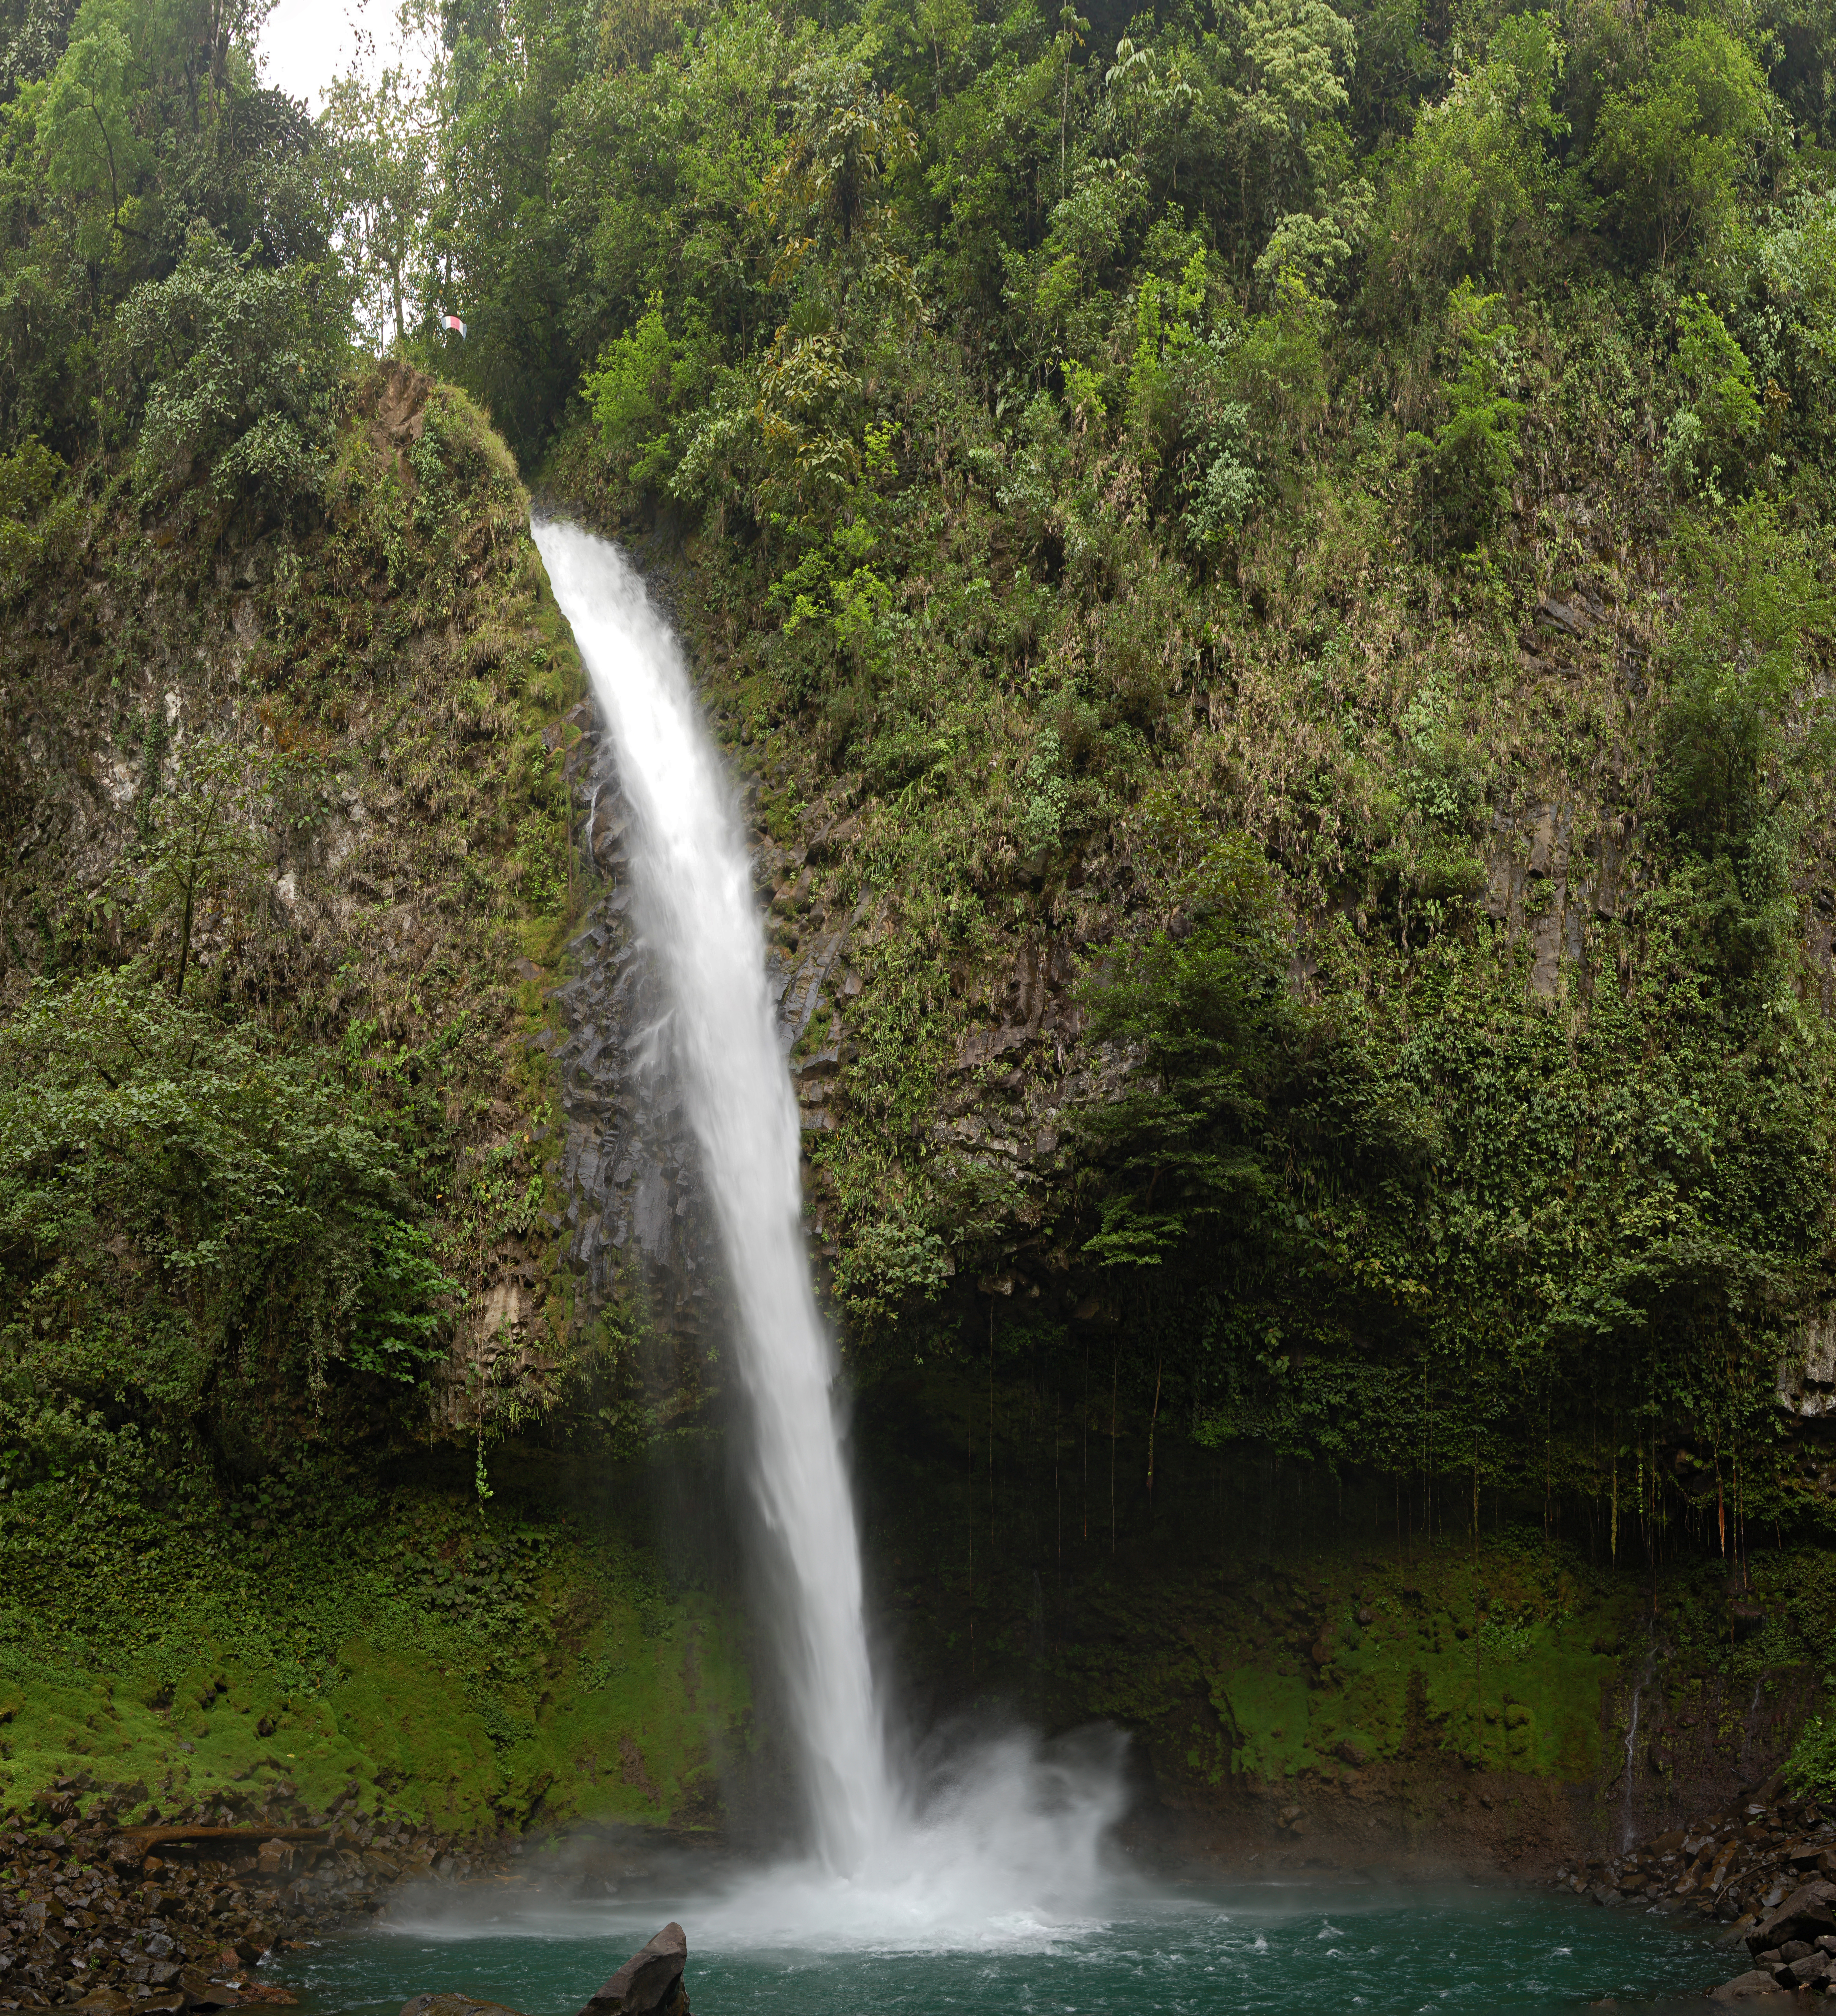 La Fortuna Waterfall, Costa Rica - Wikipedia